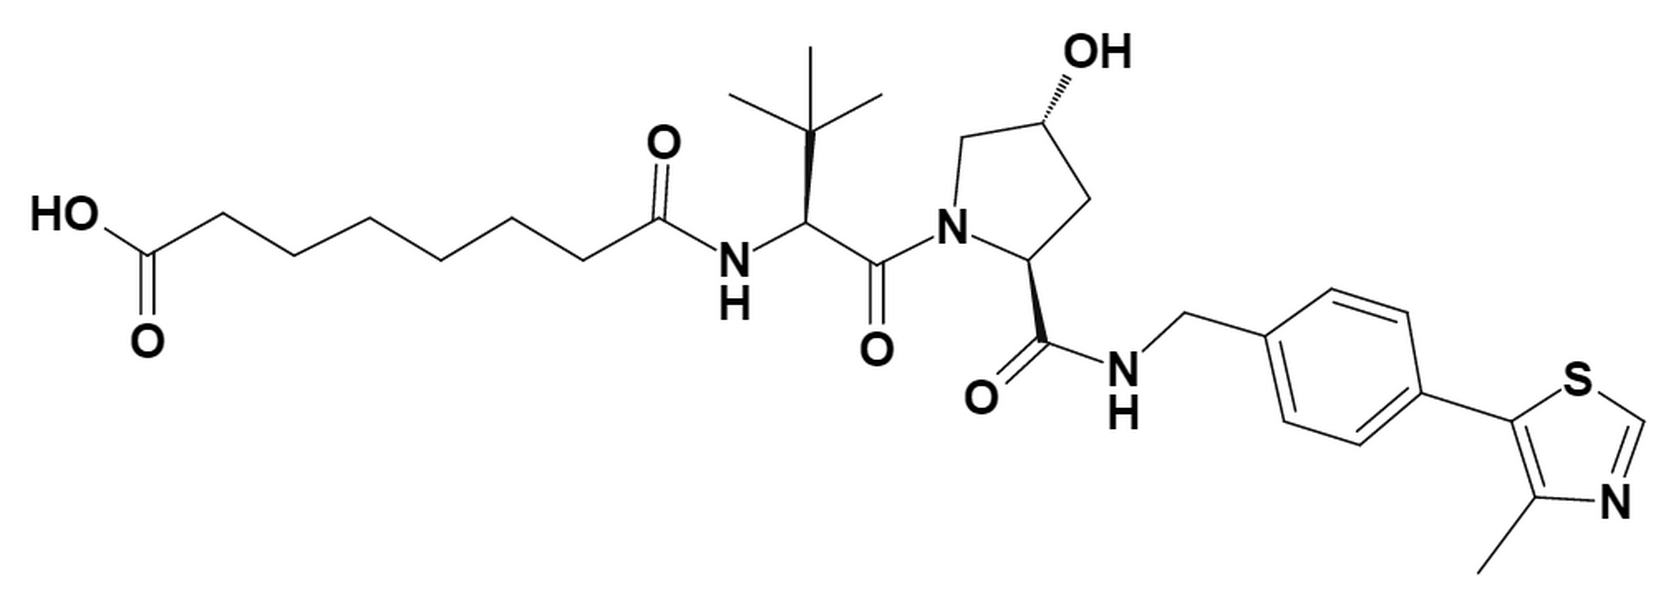 (S,R,S)-AHPC-amido-C6-acid